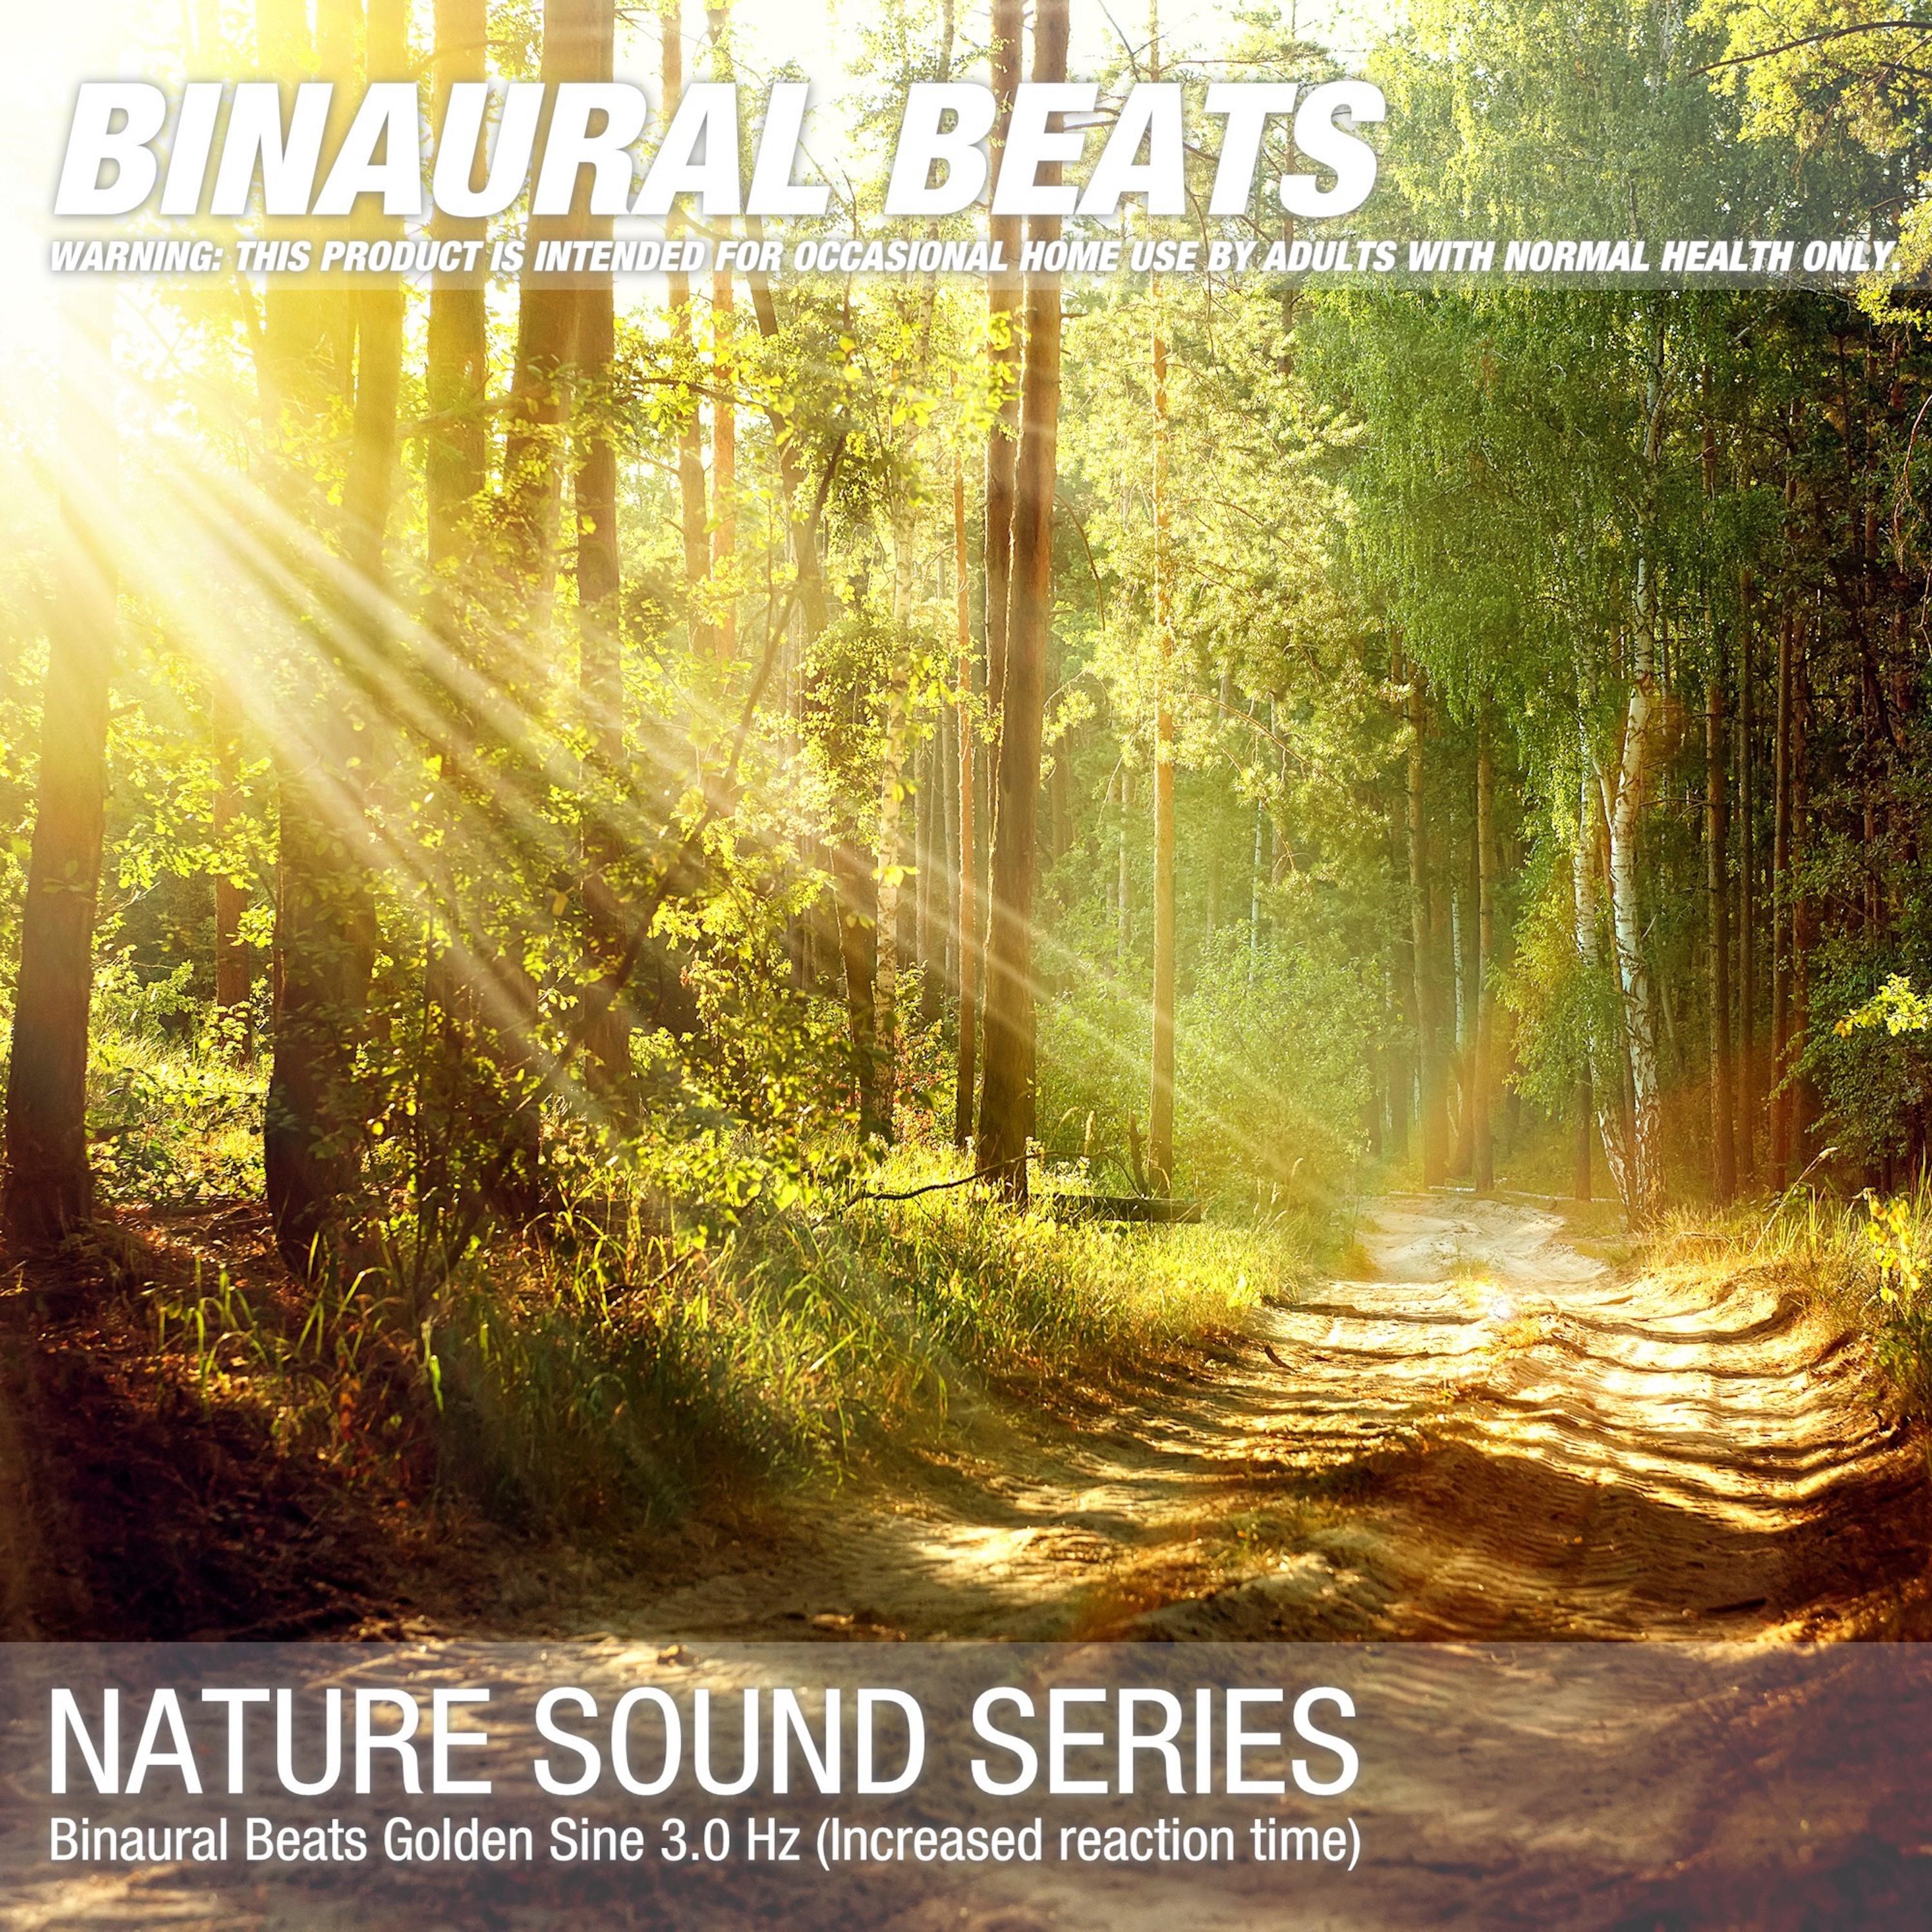 Binaural Beats Golden Sine 3.0 Hz (Increased reaction time) 06